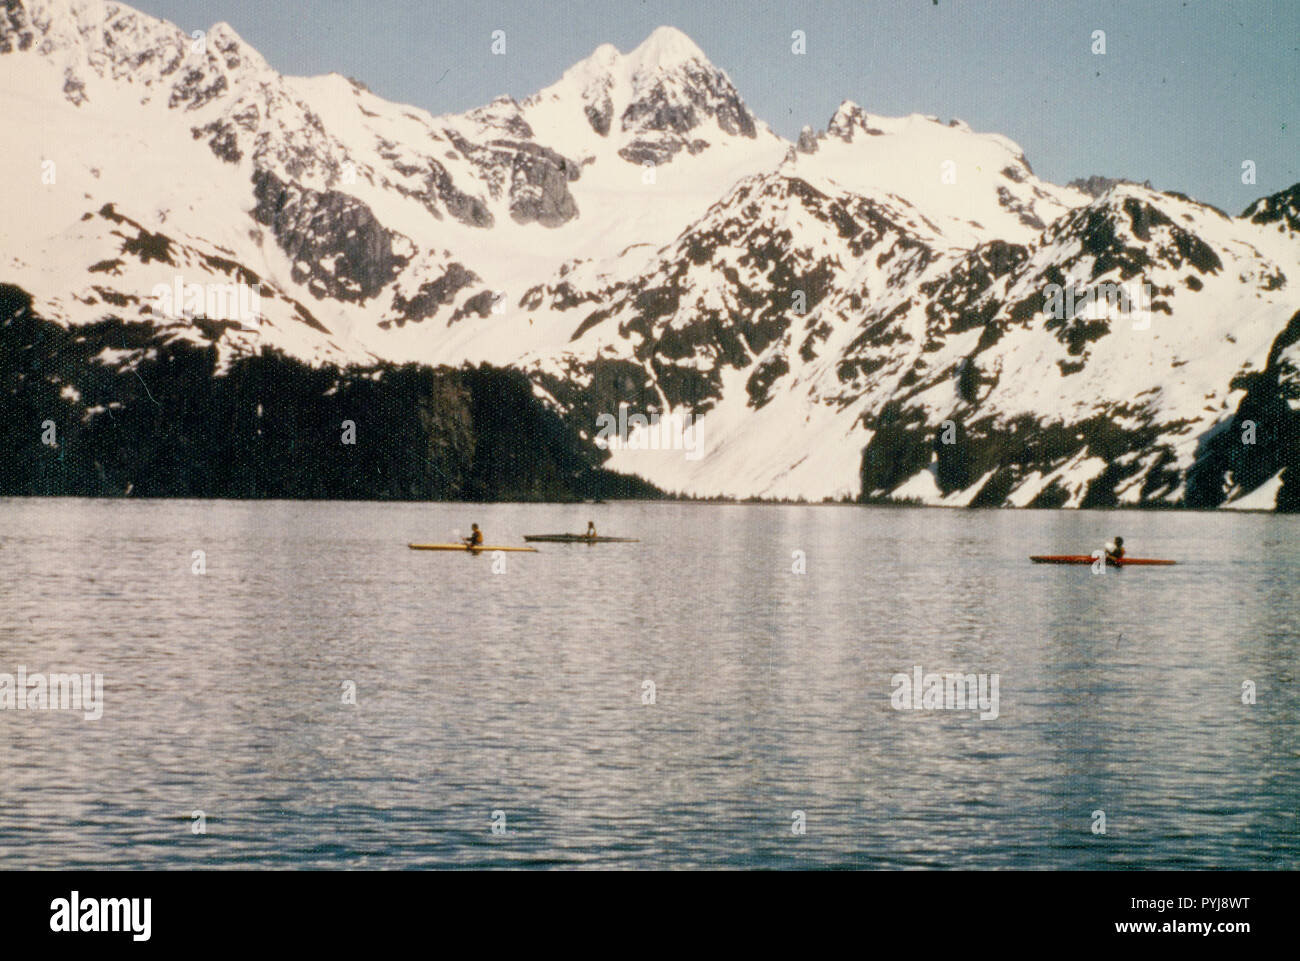 June 1975 - Aialik Bay, Bear Cove, Kayakers, Alaska Stock Photo